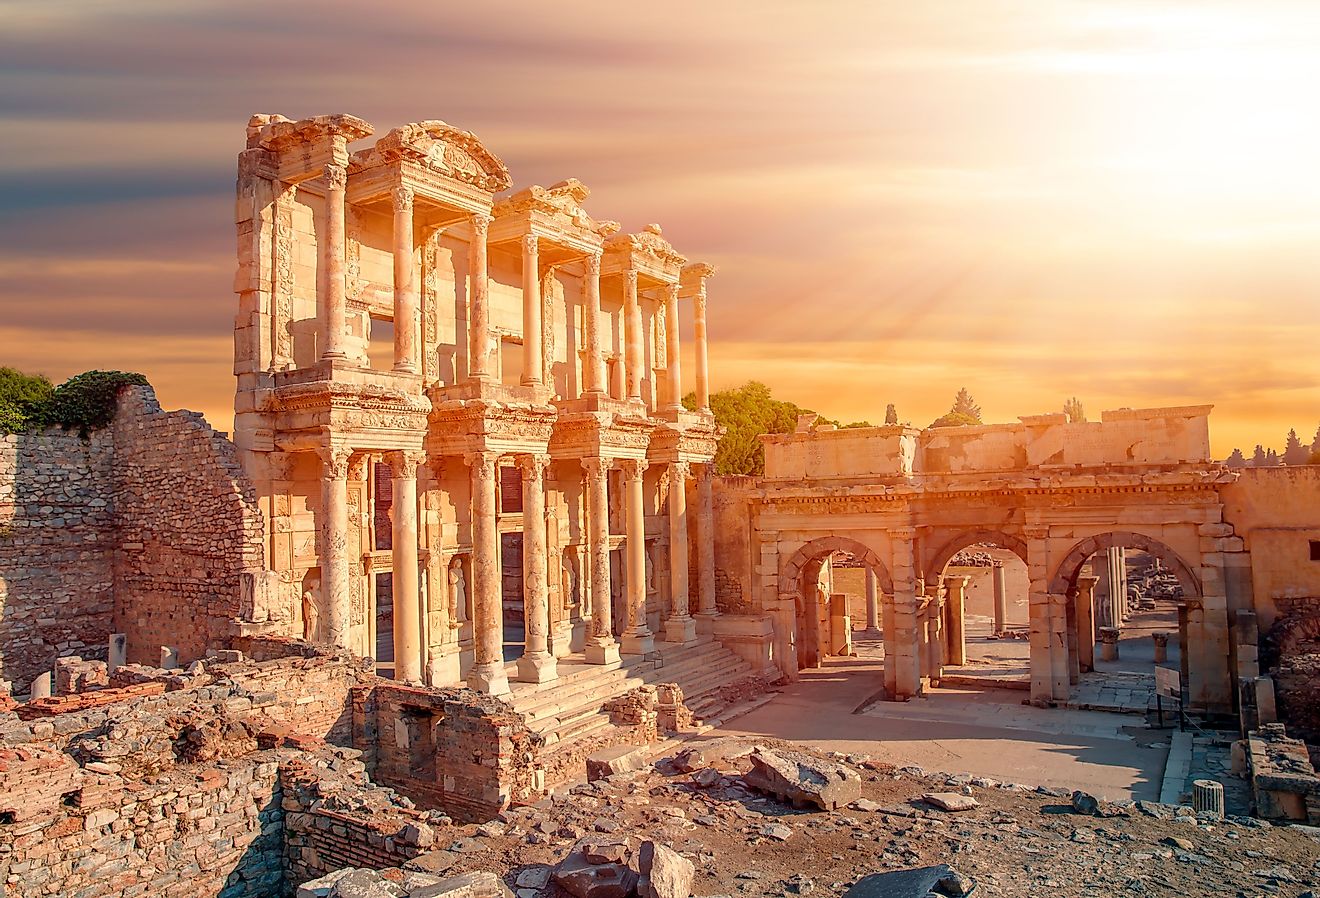 Celsus Library in Ephesus, Turkey. Image credit muratart via shutterstock